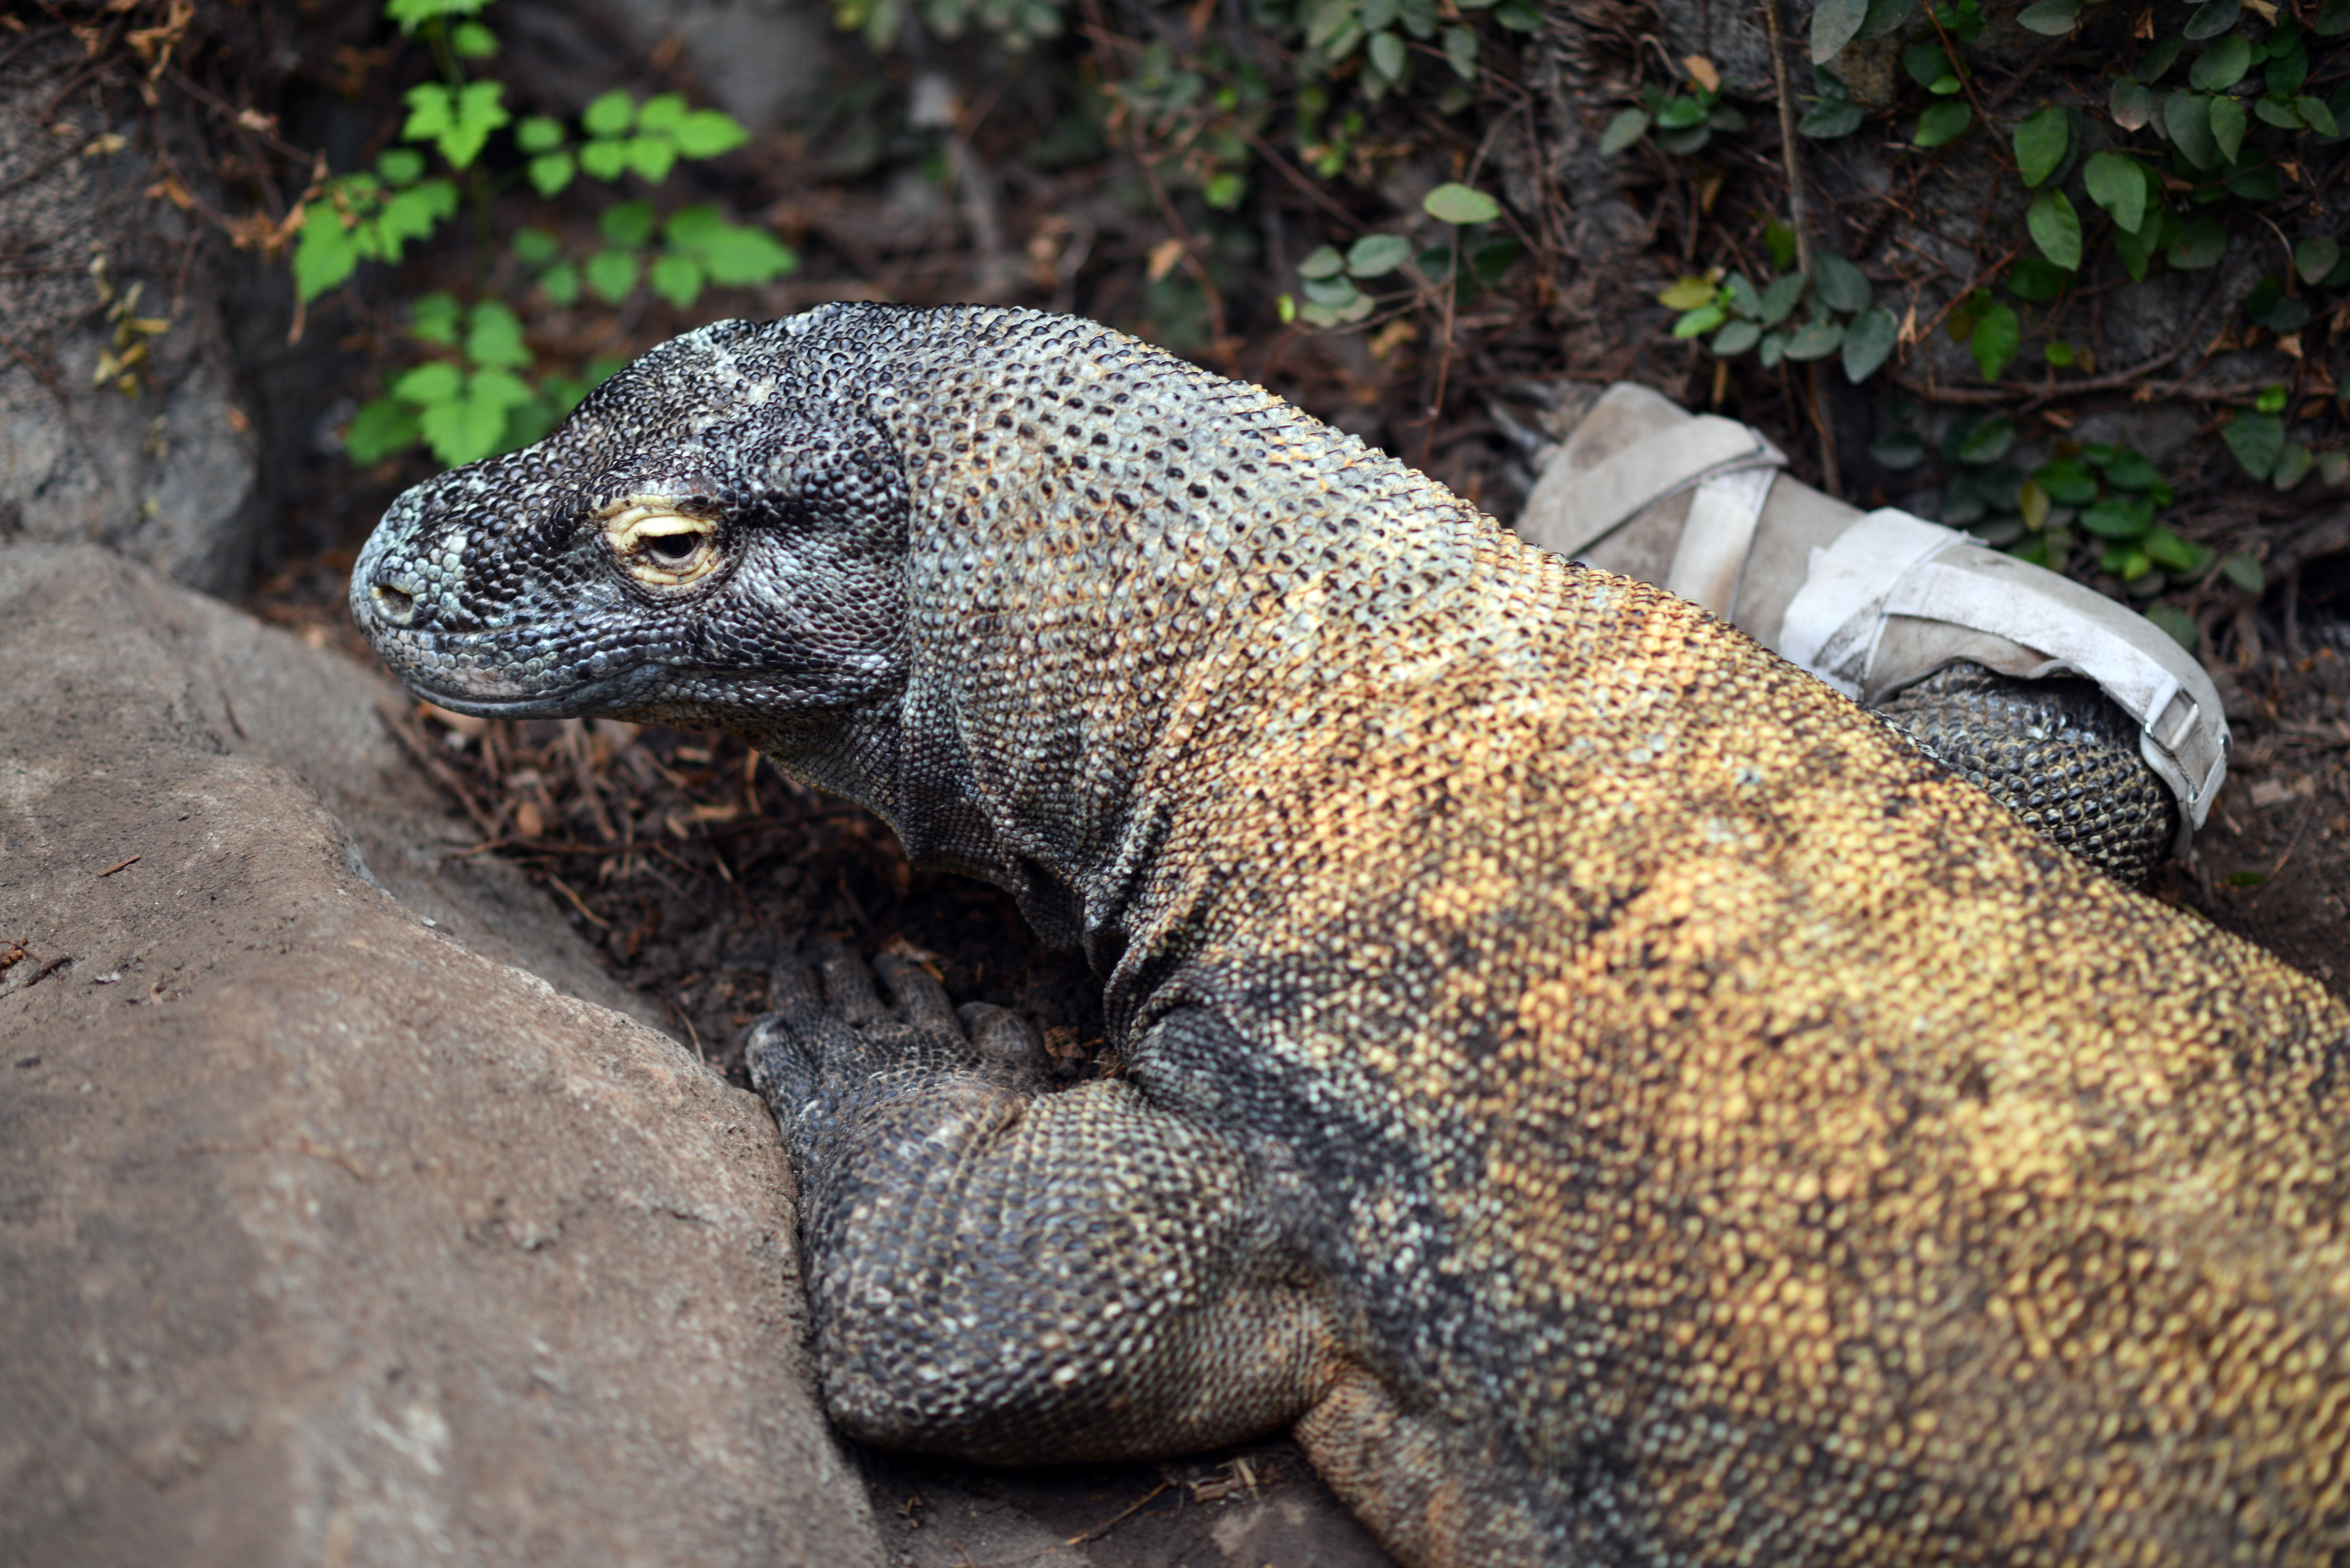 Smaug, a 16-year-old Komodo dragon